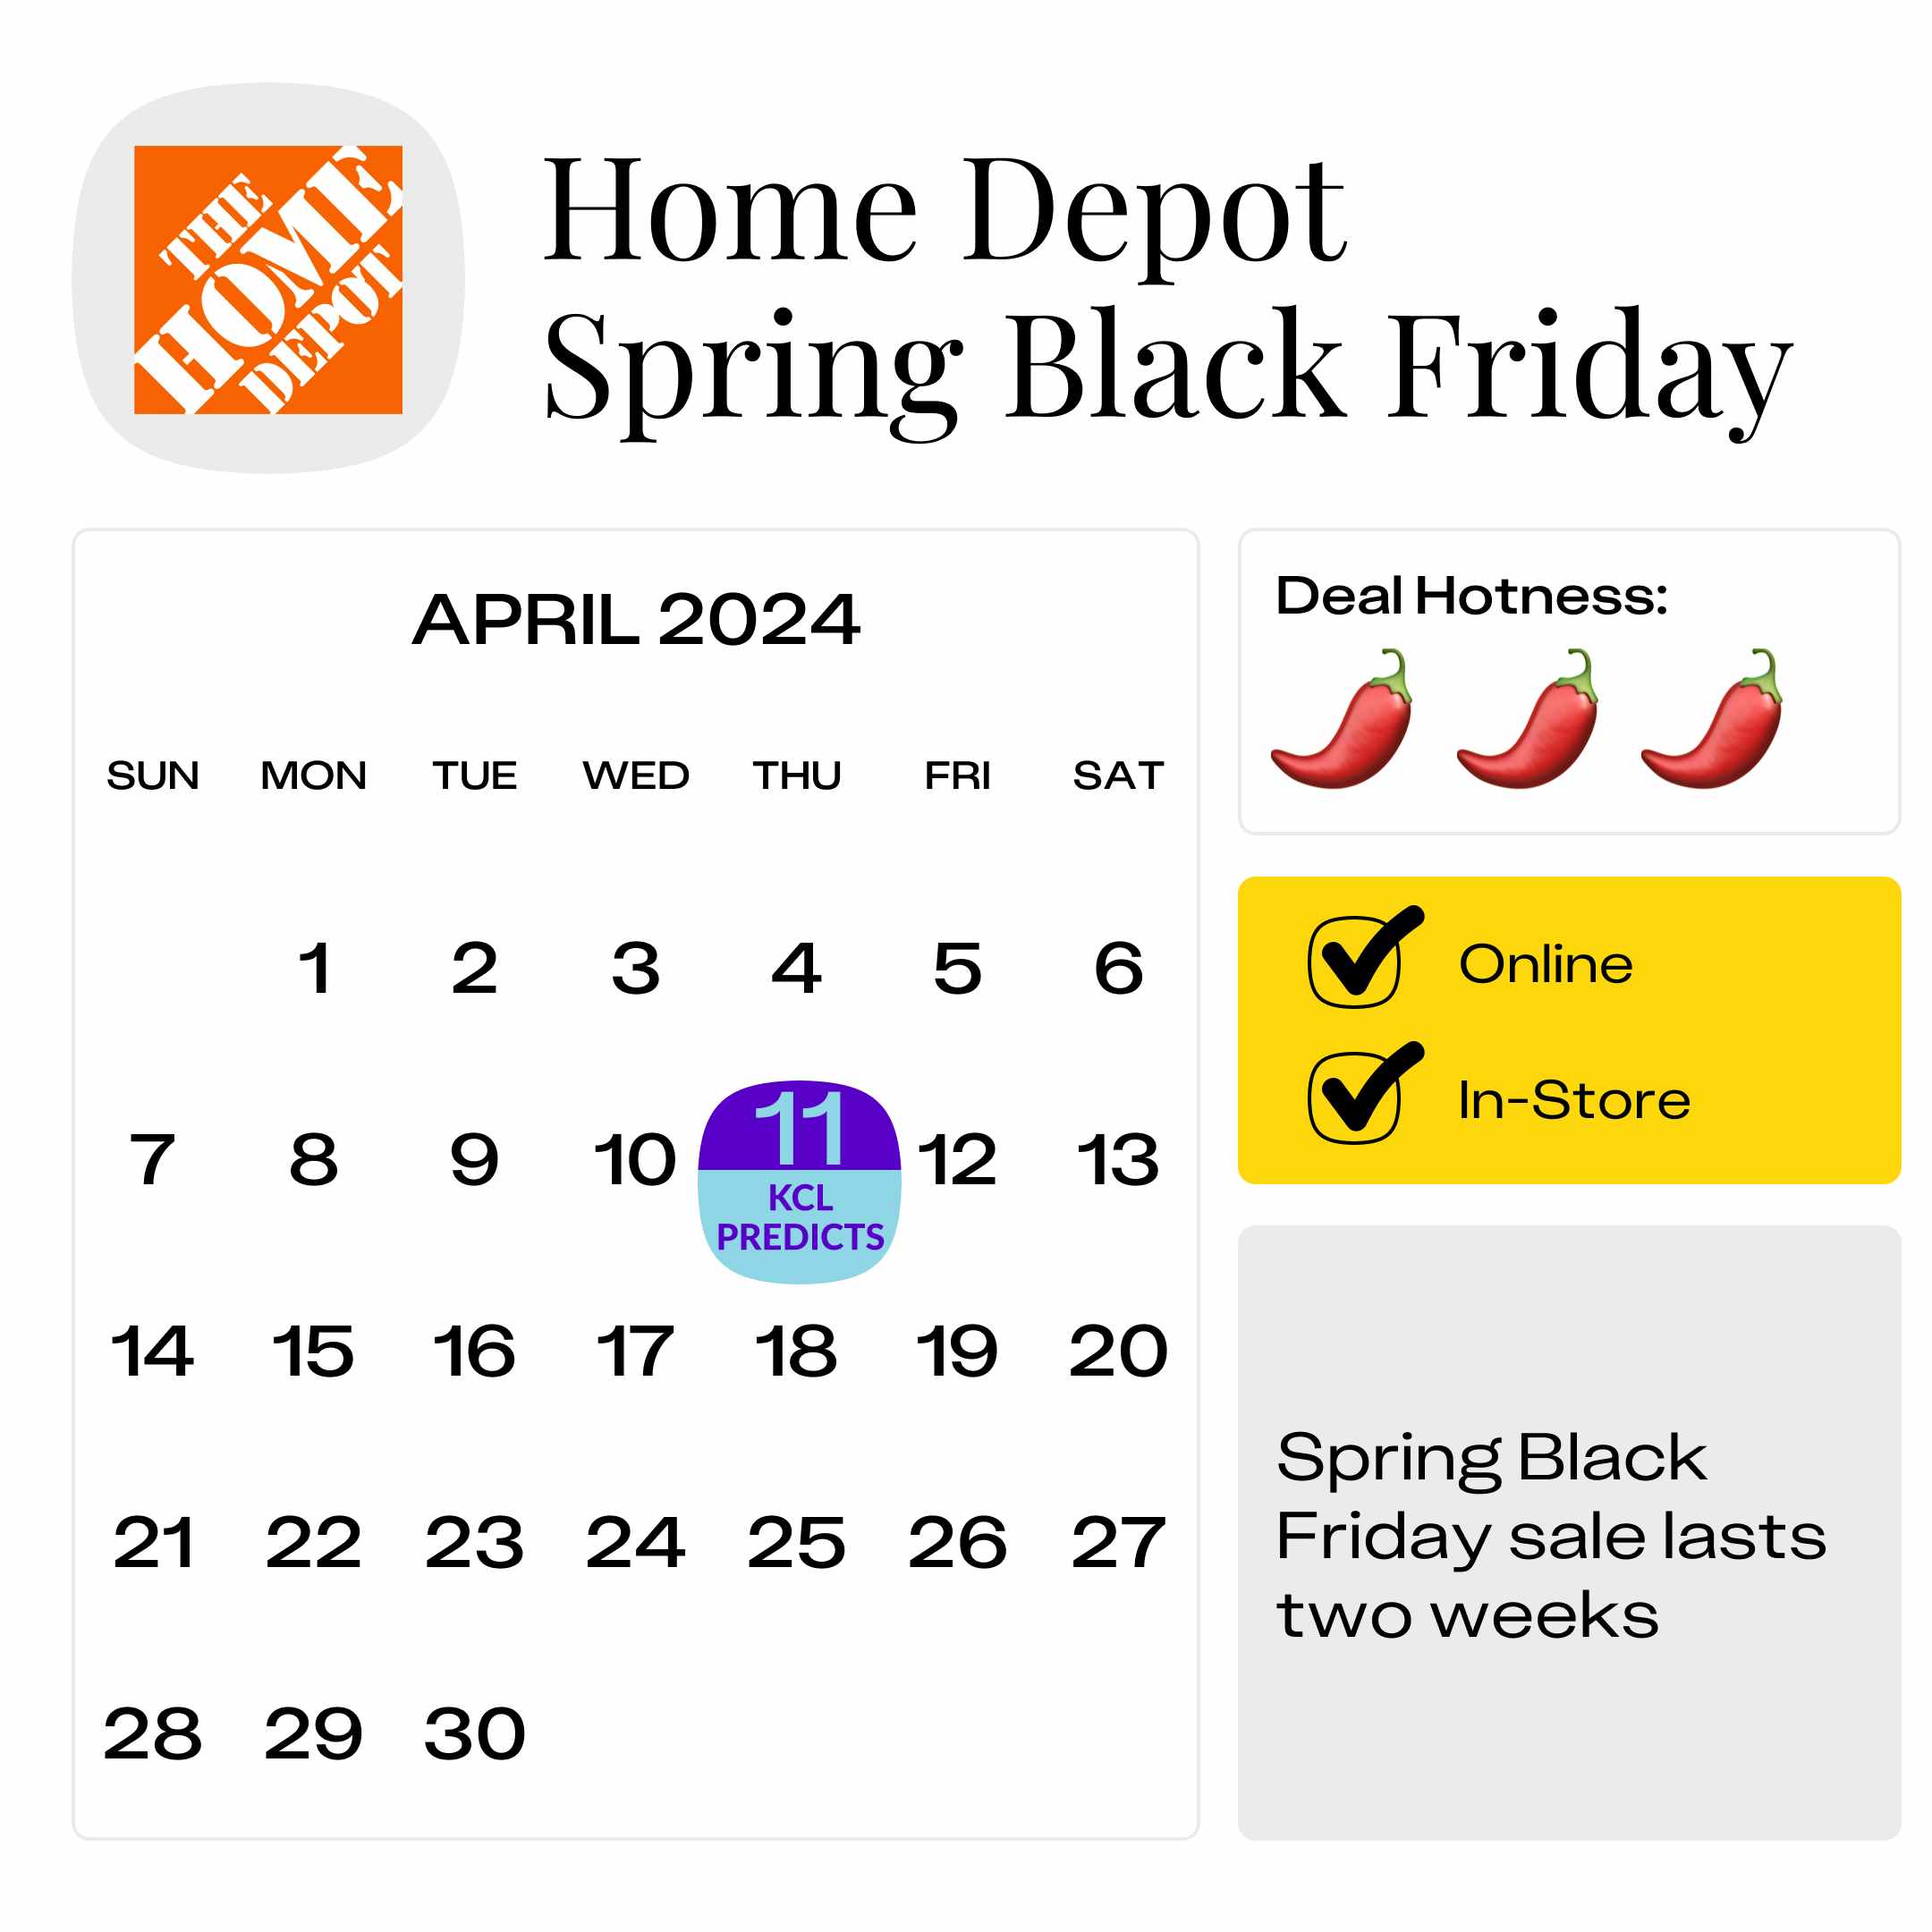 Home Depot Spring Black Friday Sale 2024 Dates and Details The Krazy